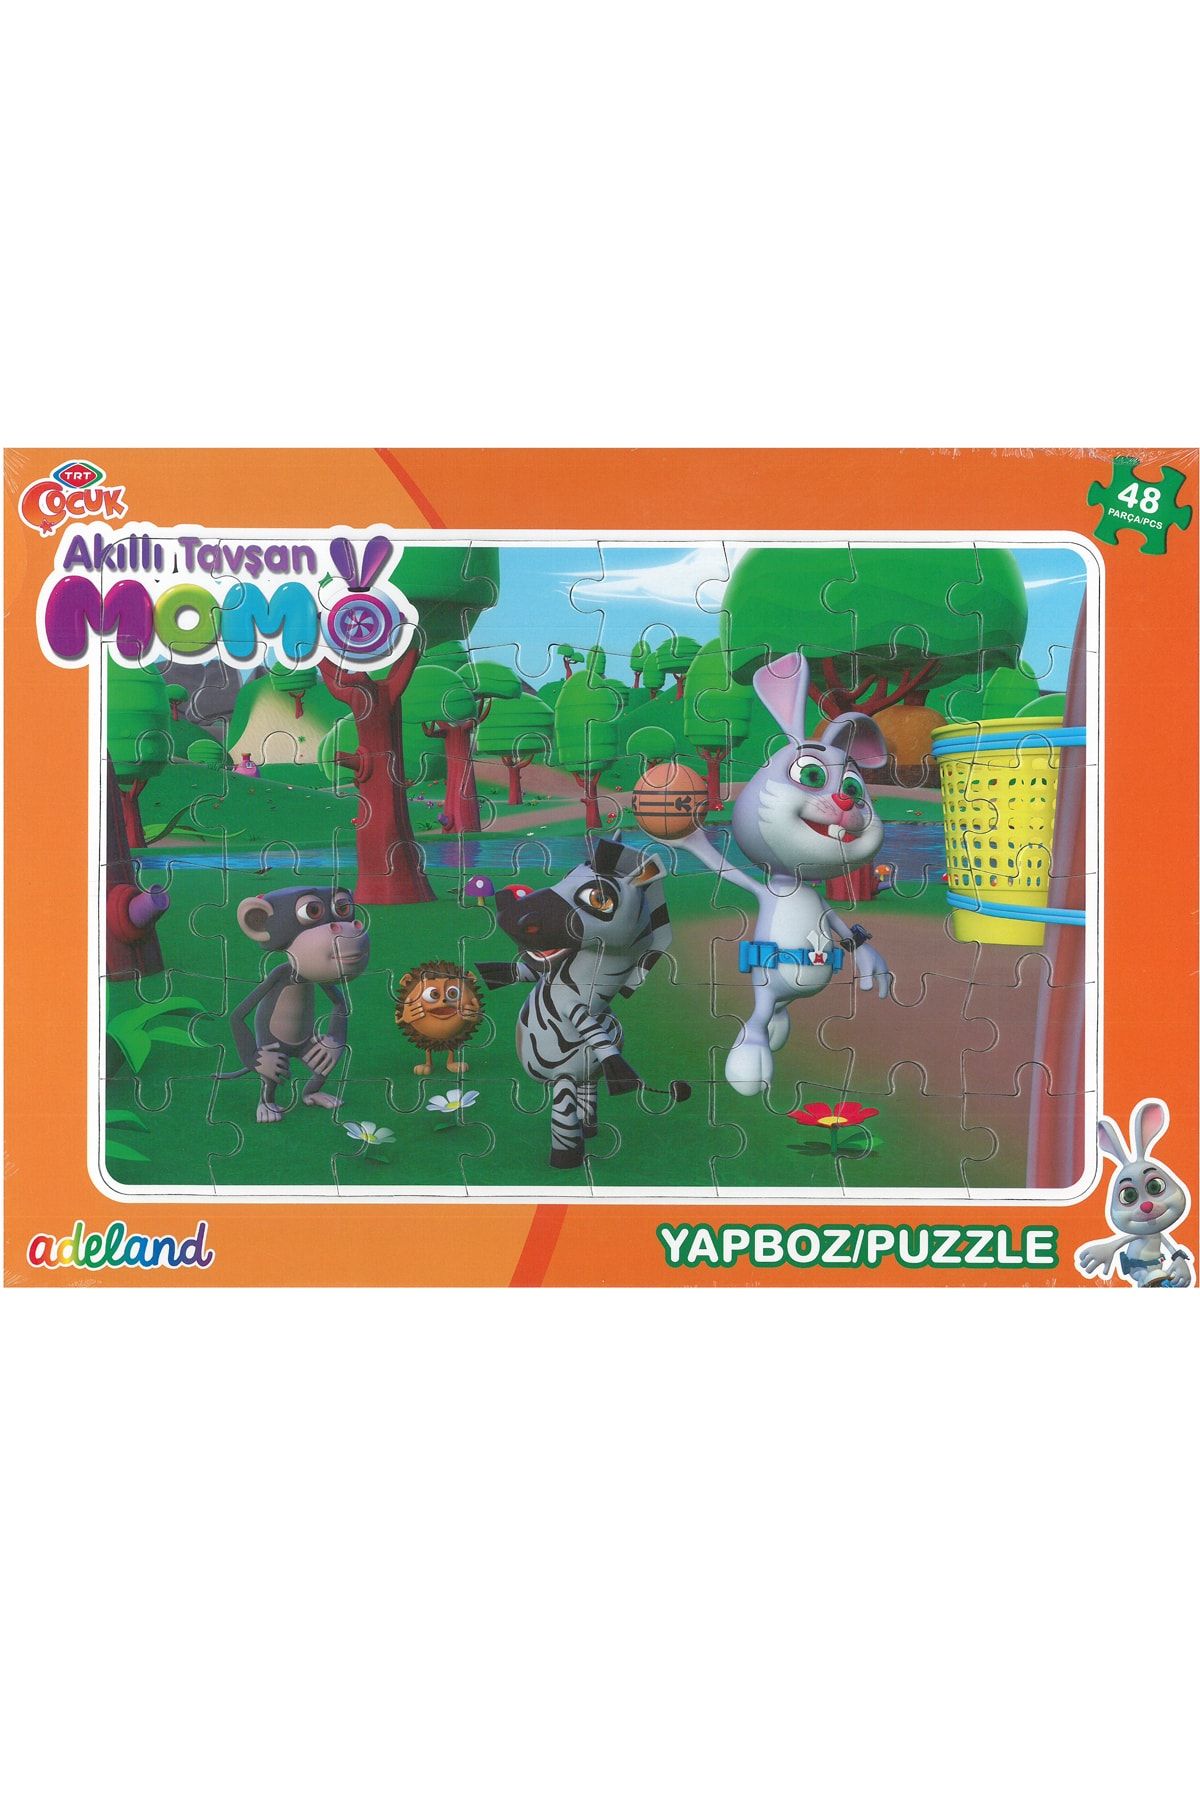 ADELAND Trt Çocuk Akıllı Tavşan Momo 48 Parça Prame Puzzle(24x34cm)